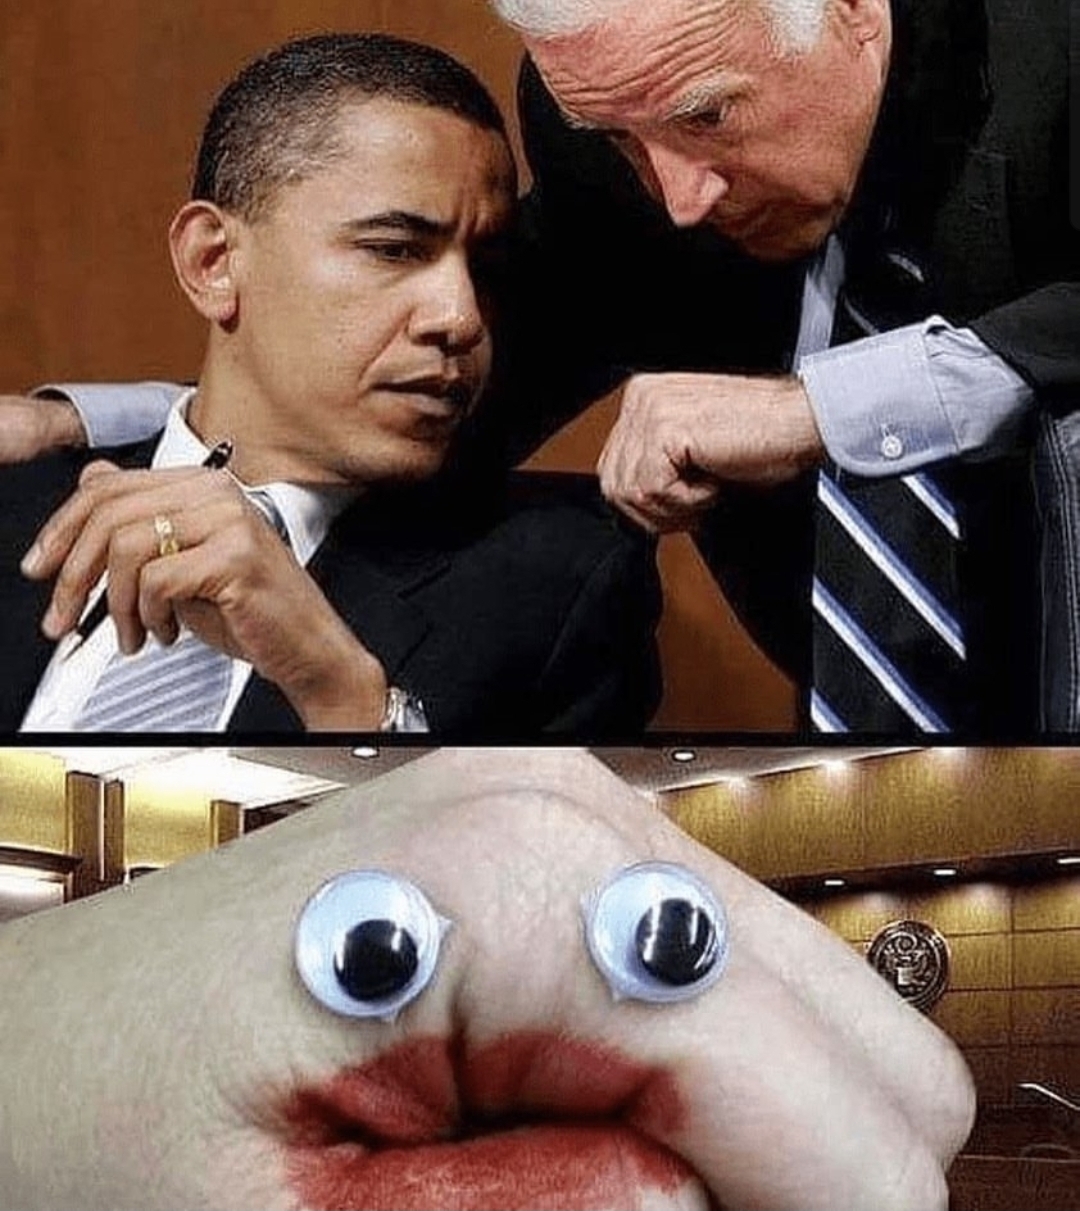 High Quality Joe Biden Mr. Handstroke Blank Meme Template